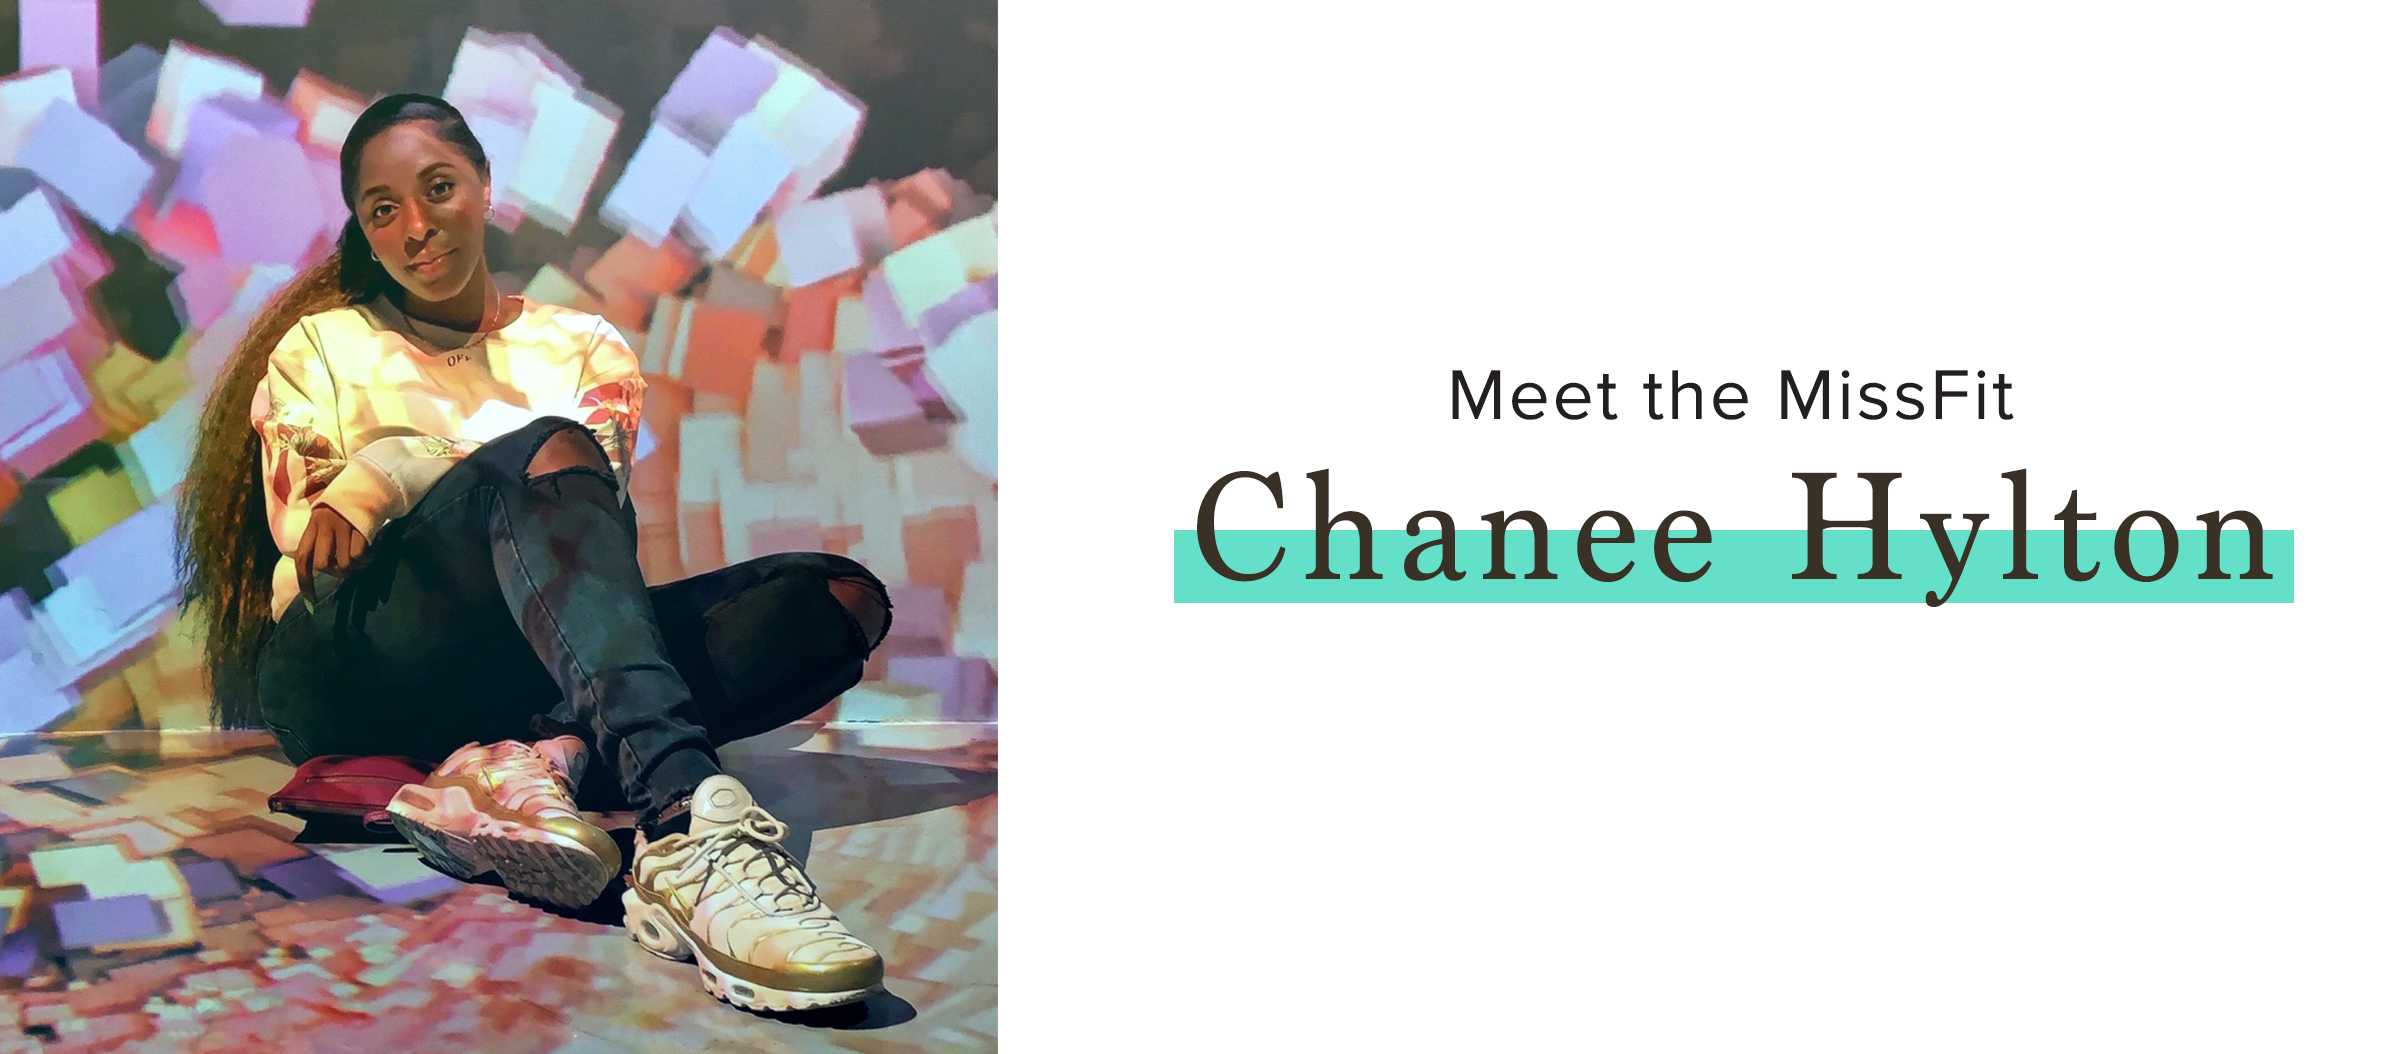 Meet the MissFit, Chanee H